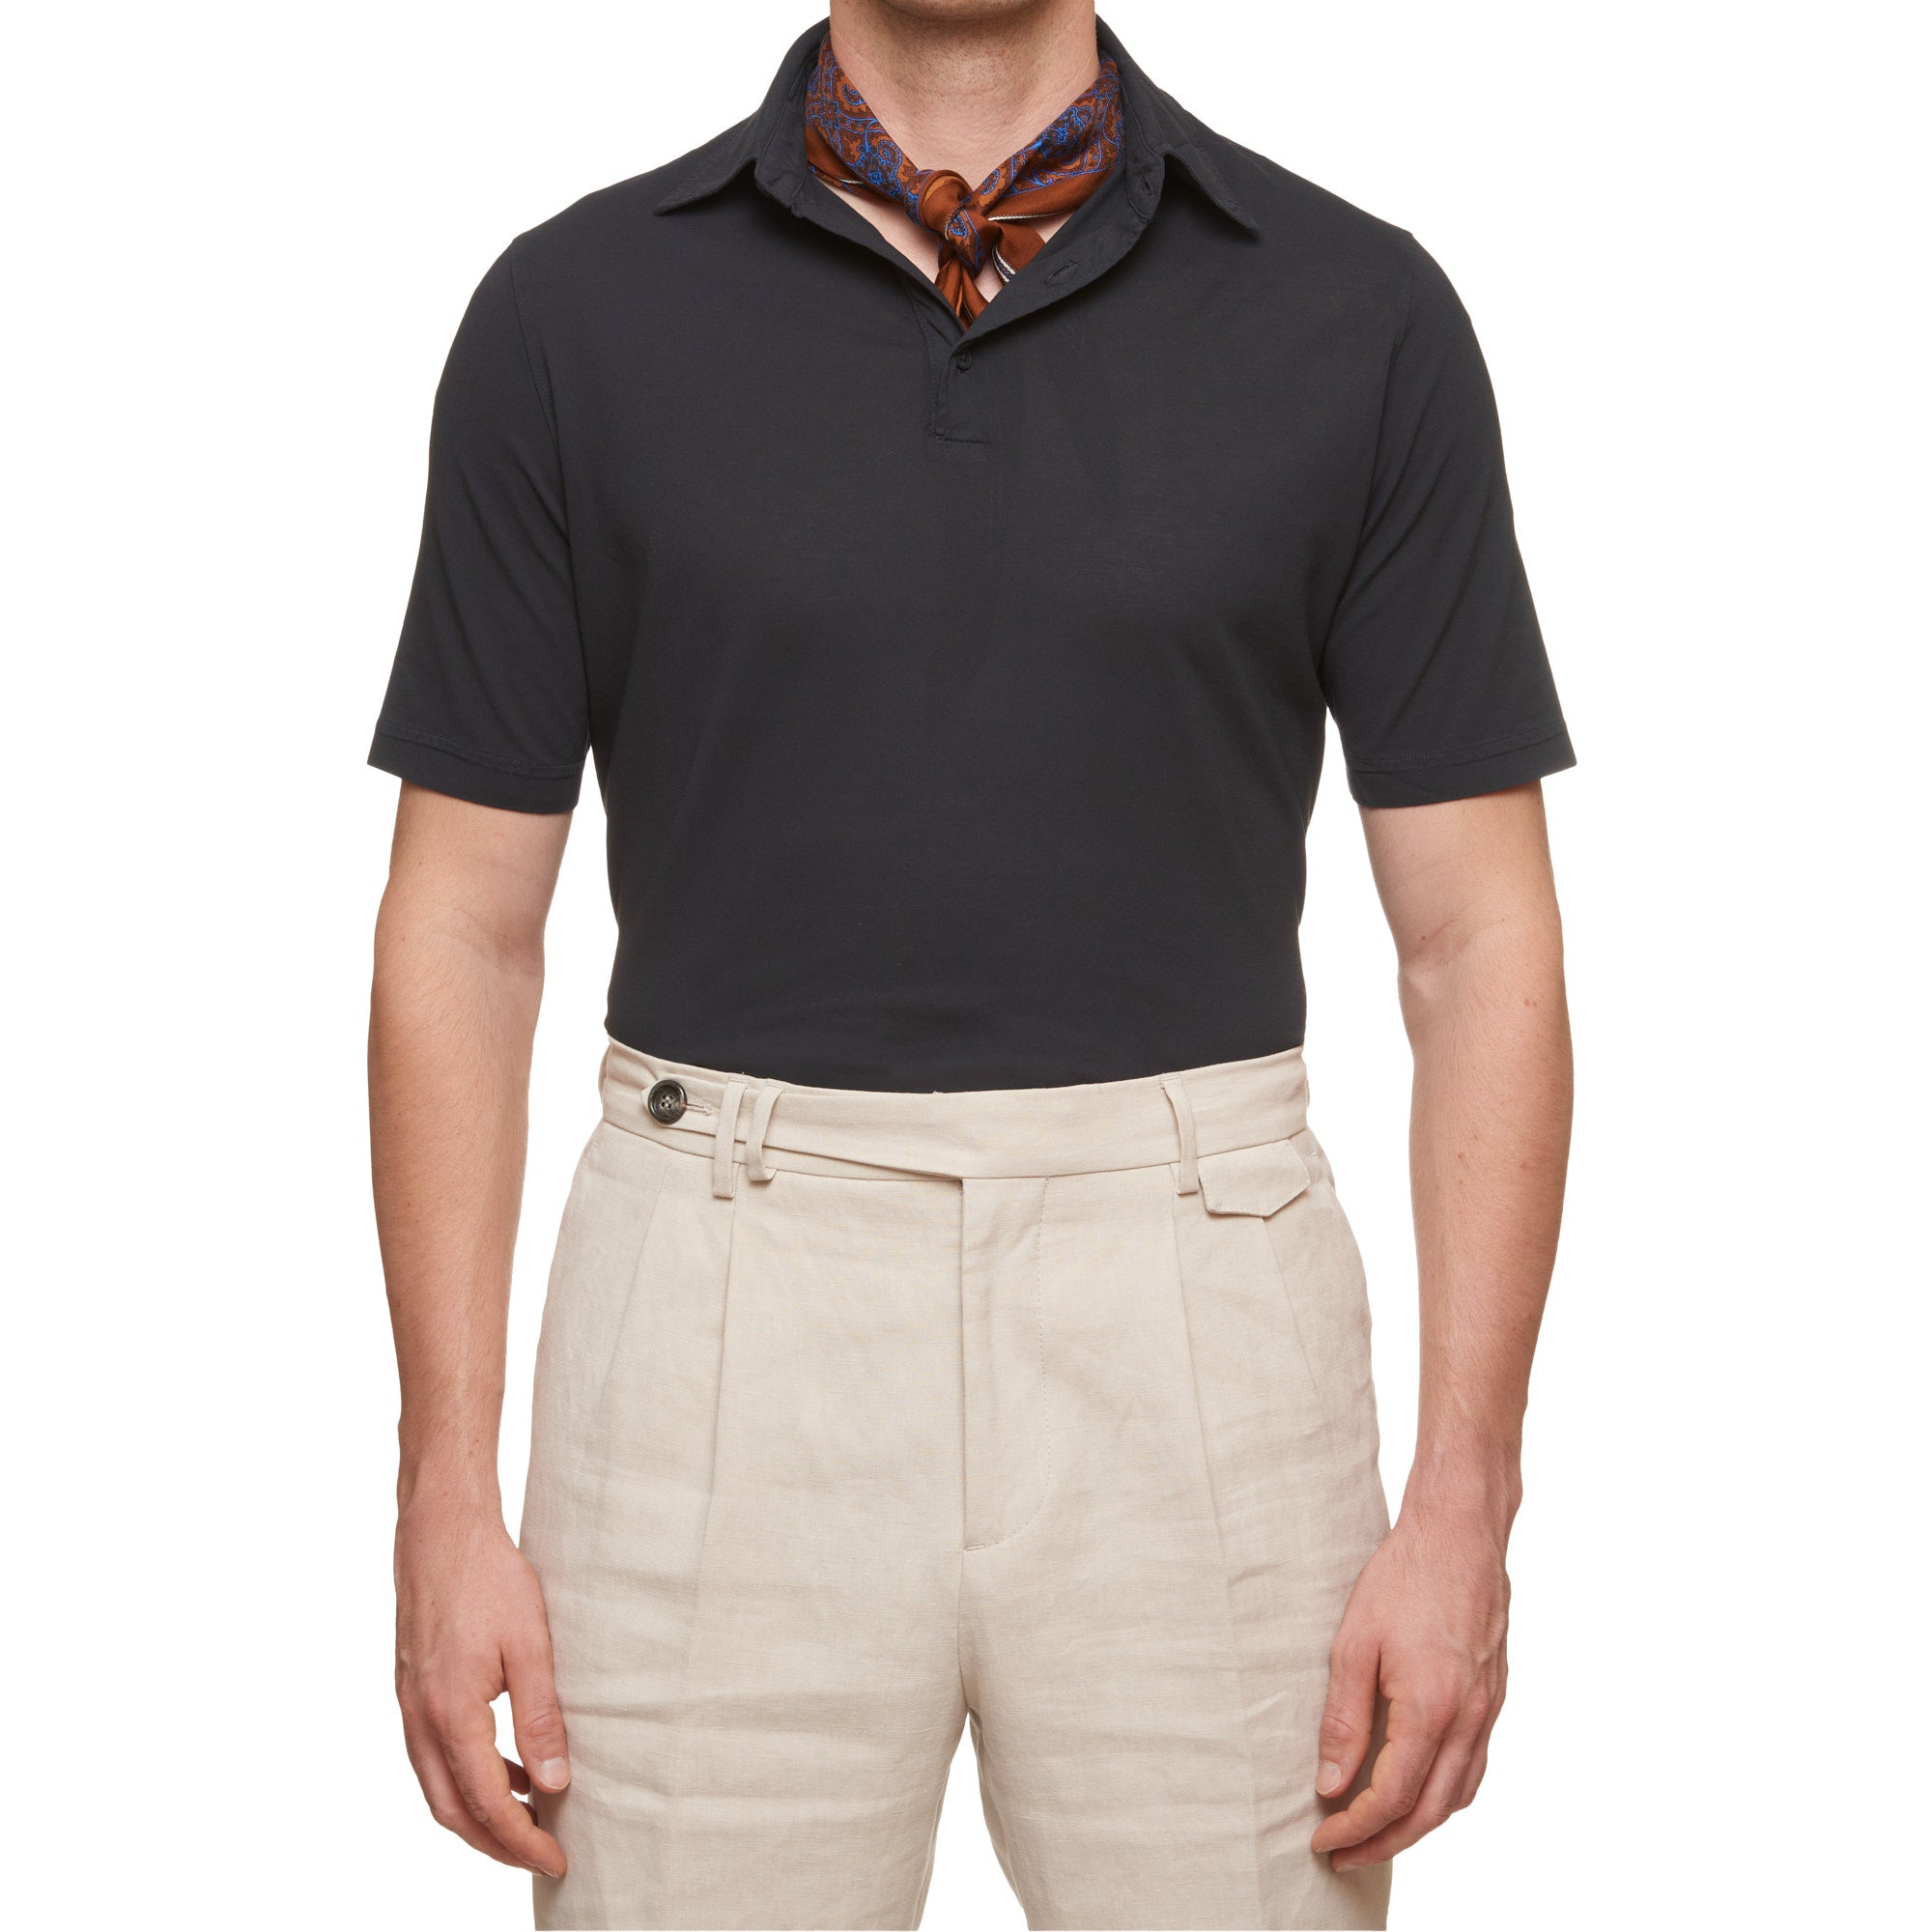 Kiton KIRED "Positano" Dark Blue Exclusive Crepe Cotton Short Sleeve Polo Shirt 2023 KIRED